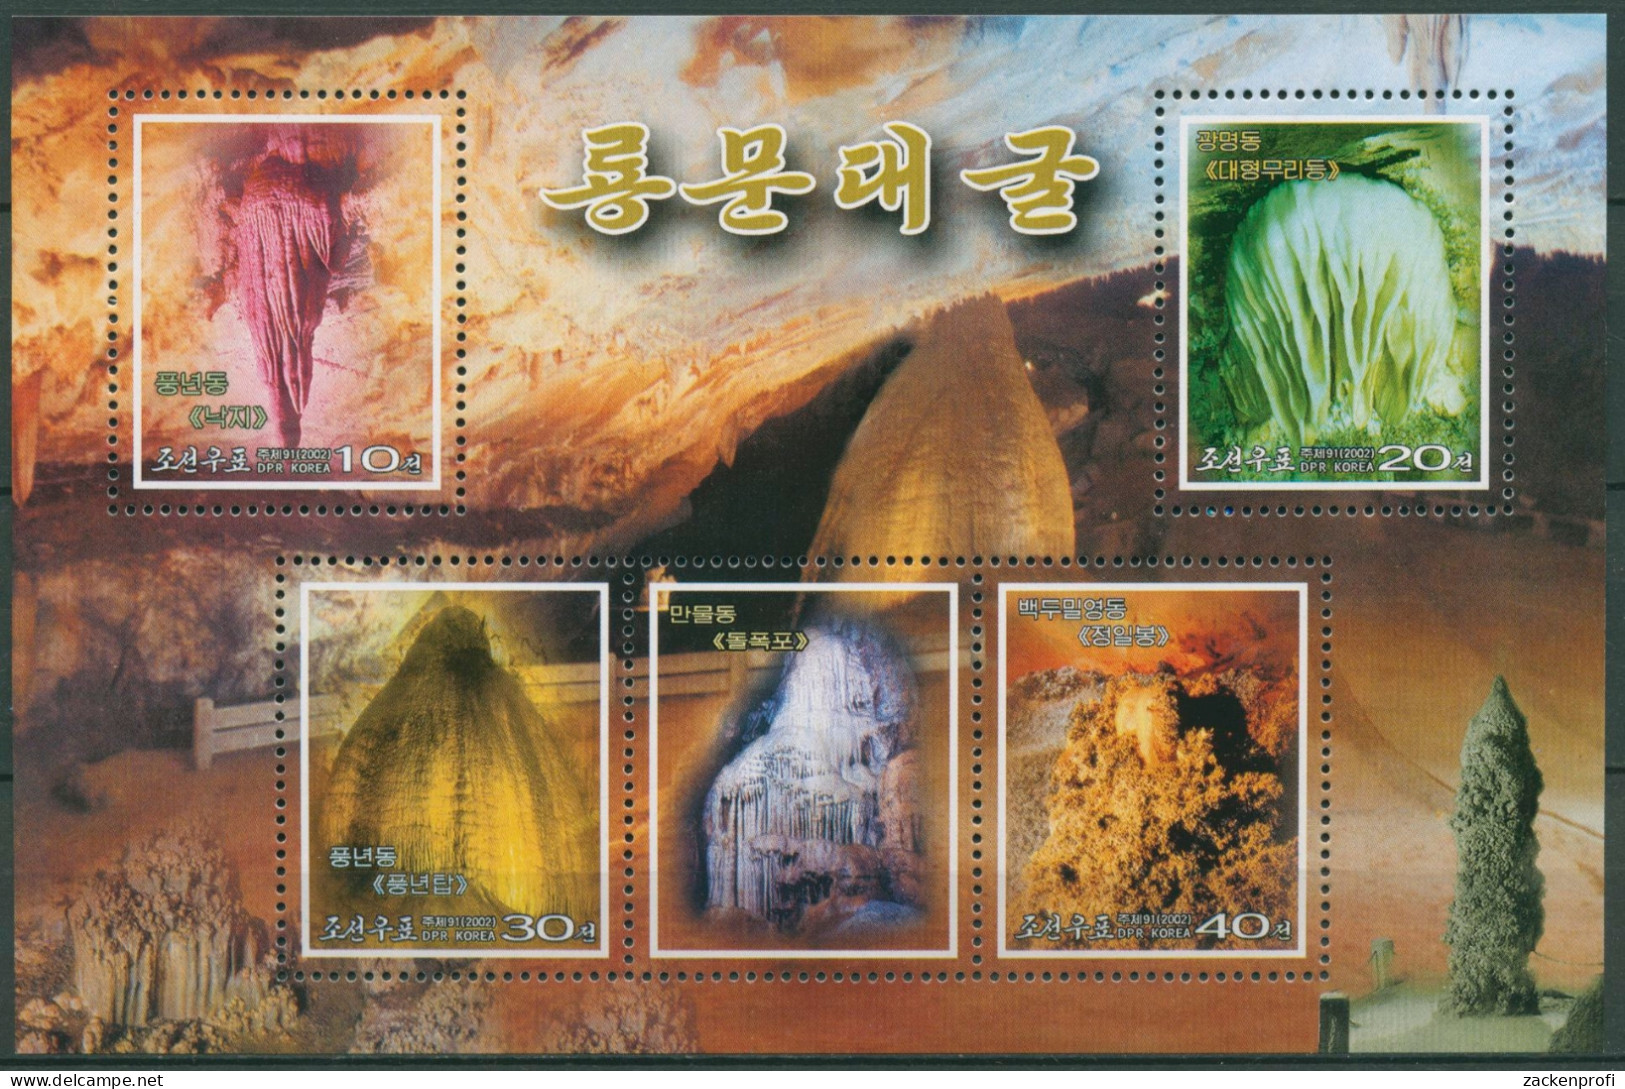 Korea (Nord) 2002 Tropfsteinhöhle Block 527 A Postfrisch (C74957) - Korea (Nord-)